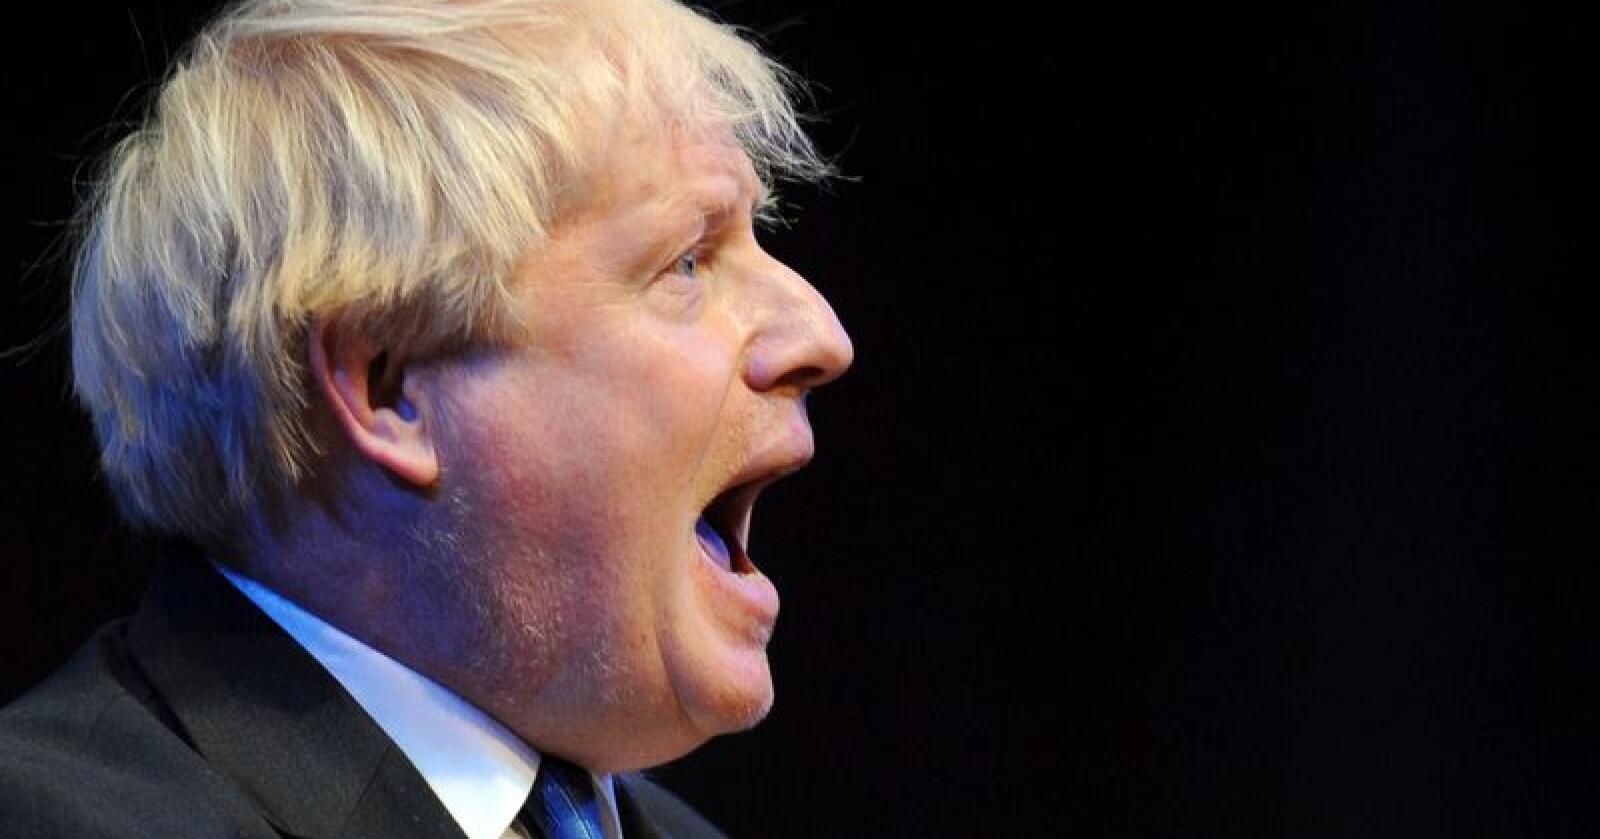 Tidligere utenriksminister Boris Johnson gikk hardt ut mot Theresa May under De konservatives partilandsmøte i Birmingham og refset Mays brexitplan. Foto: Rui Viera / AP NTB scanpix